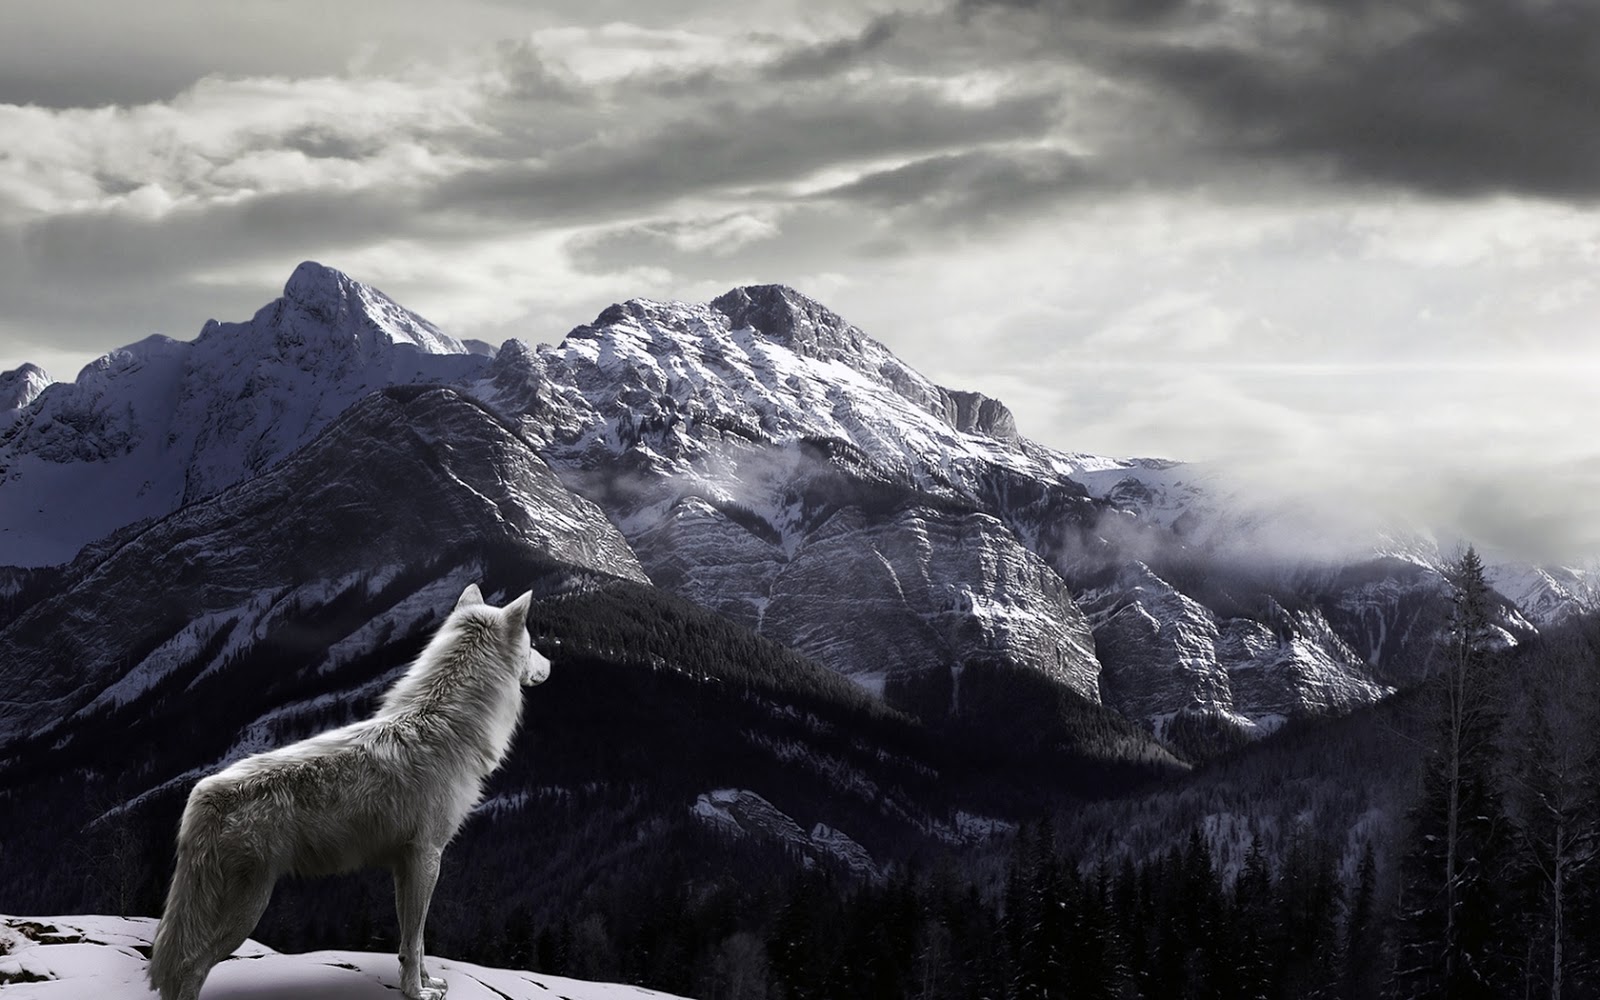 http://4.bp.blogspot.com/-33pMylOCGz4/UKd2mZyLJ5I/AAAAAAAAGKg/19k1ilmxyDA/s1600/Wolf-Watching-Snowy-Fog-Covered-Mountains-HD-Wallpaper.jpg